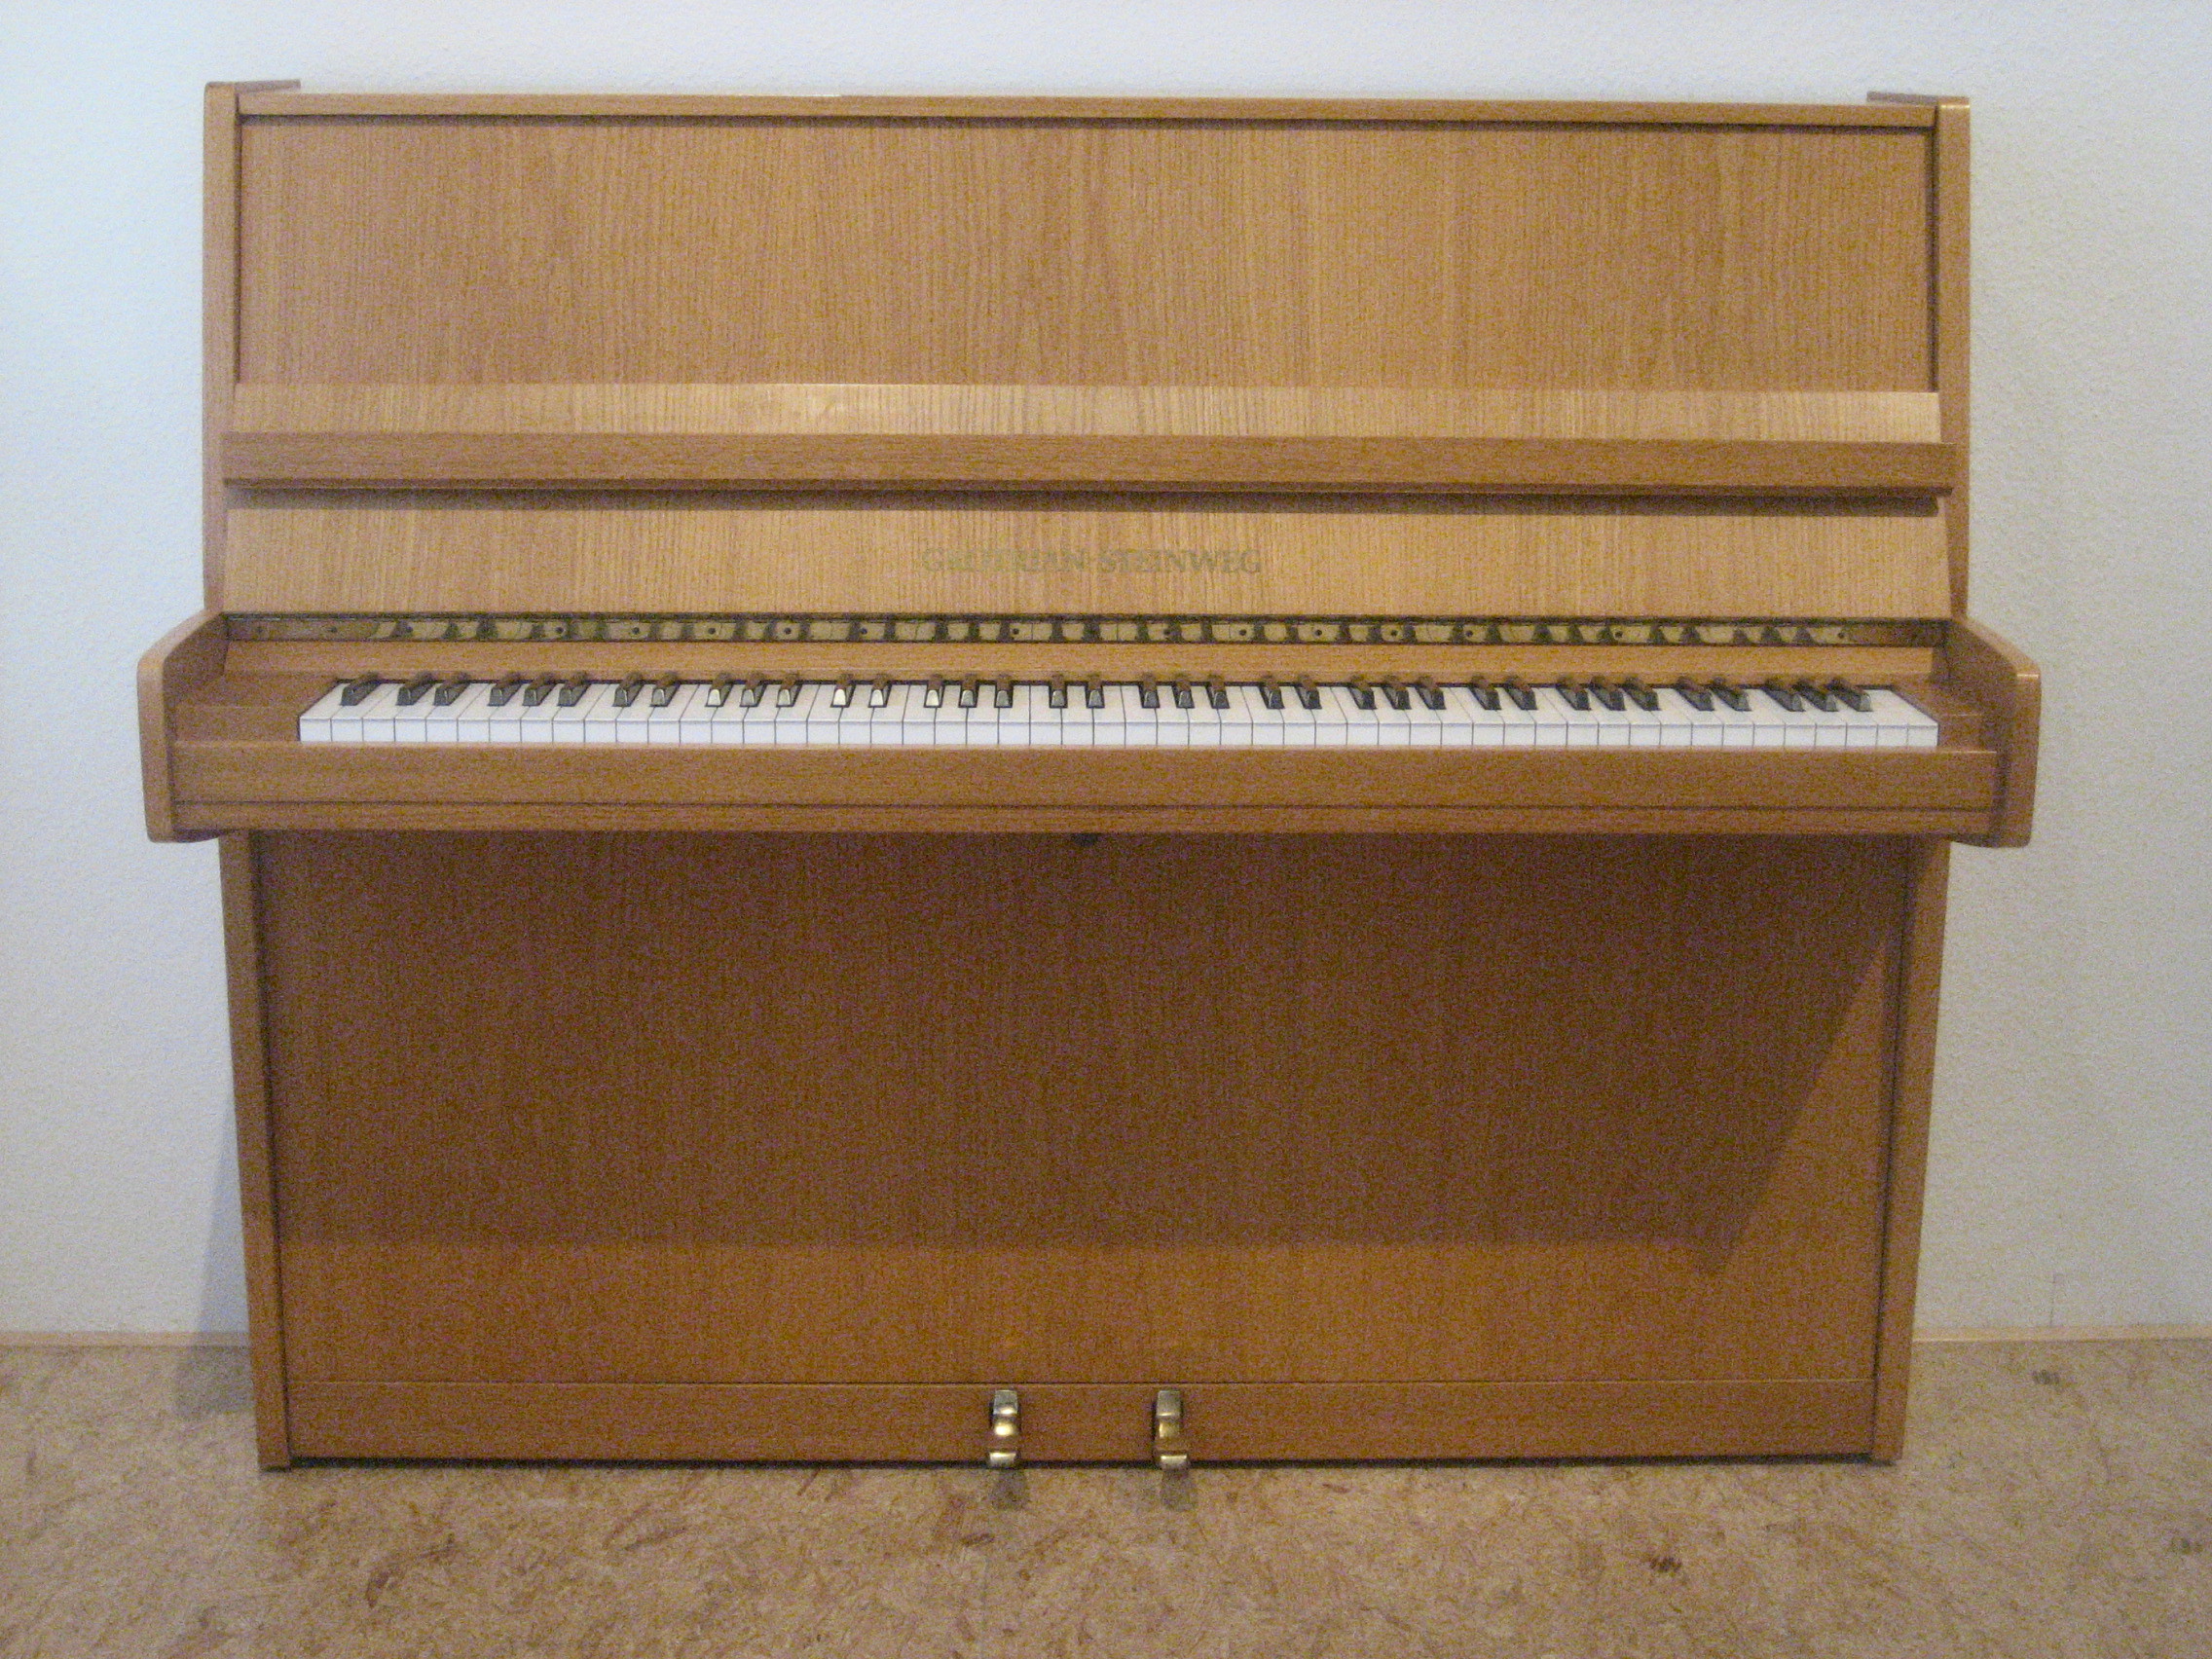 Grotrin Steinweg Klavier Modell 120, Eiche